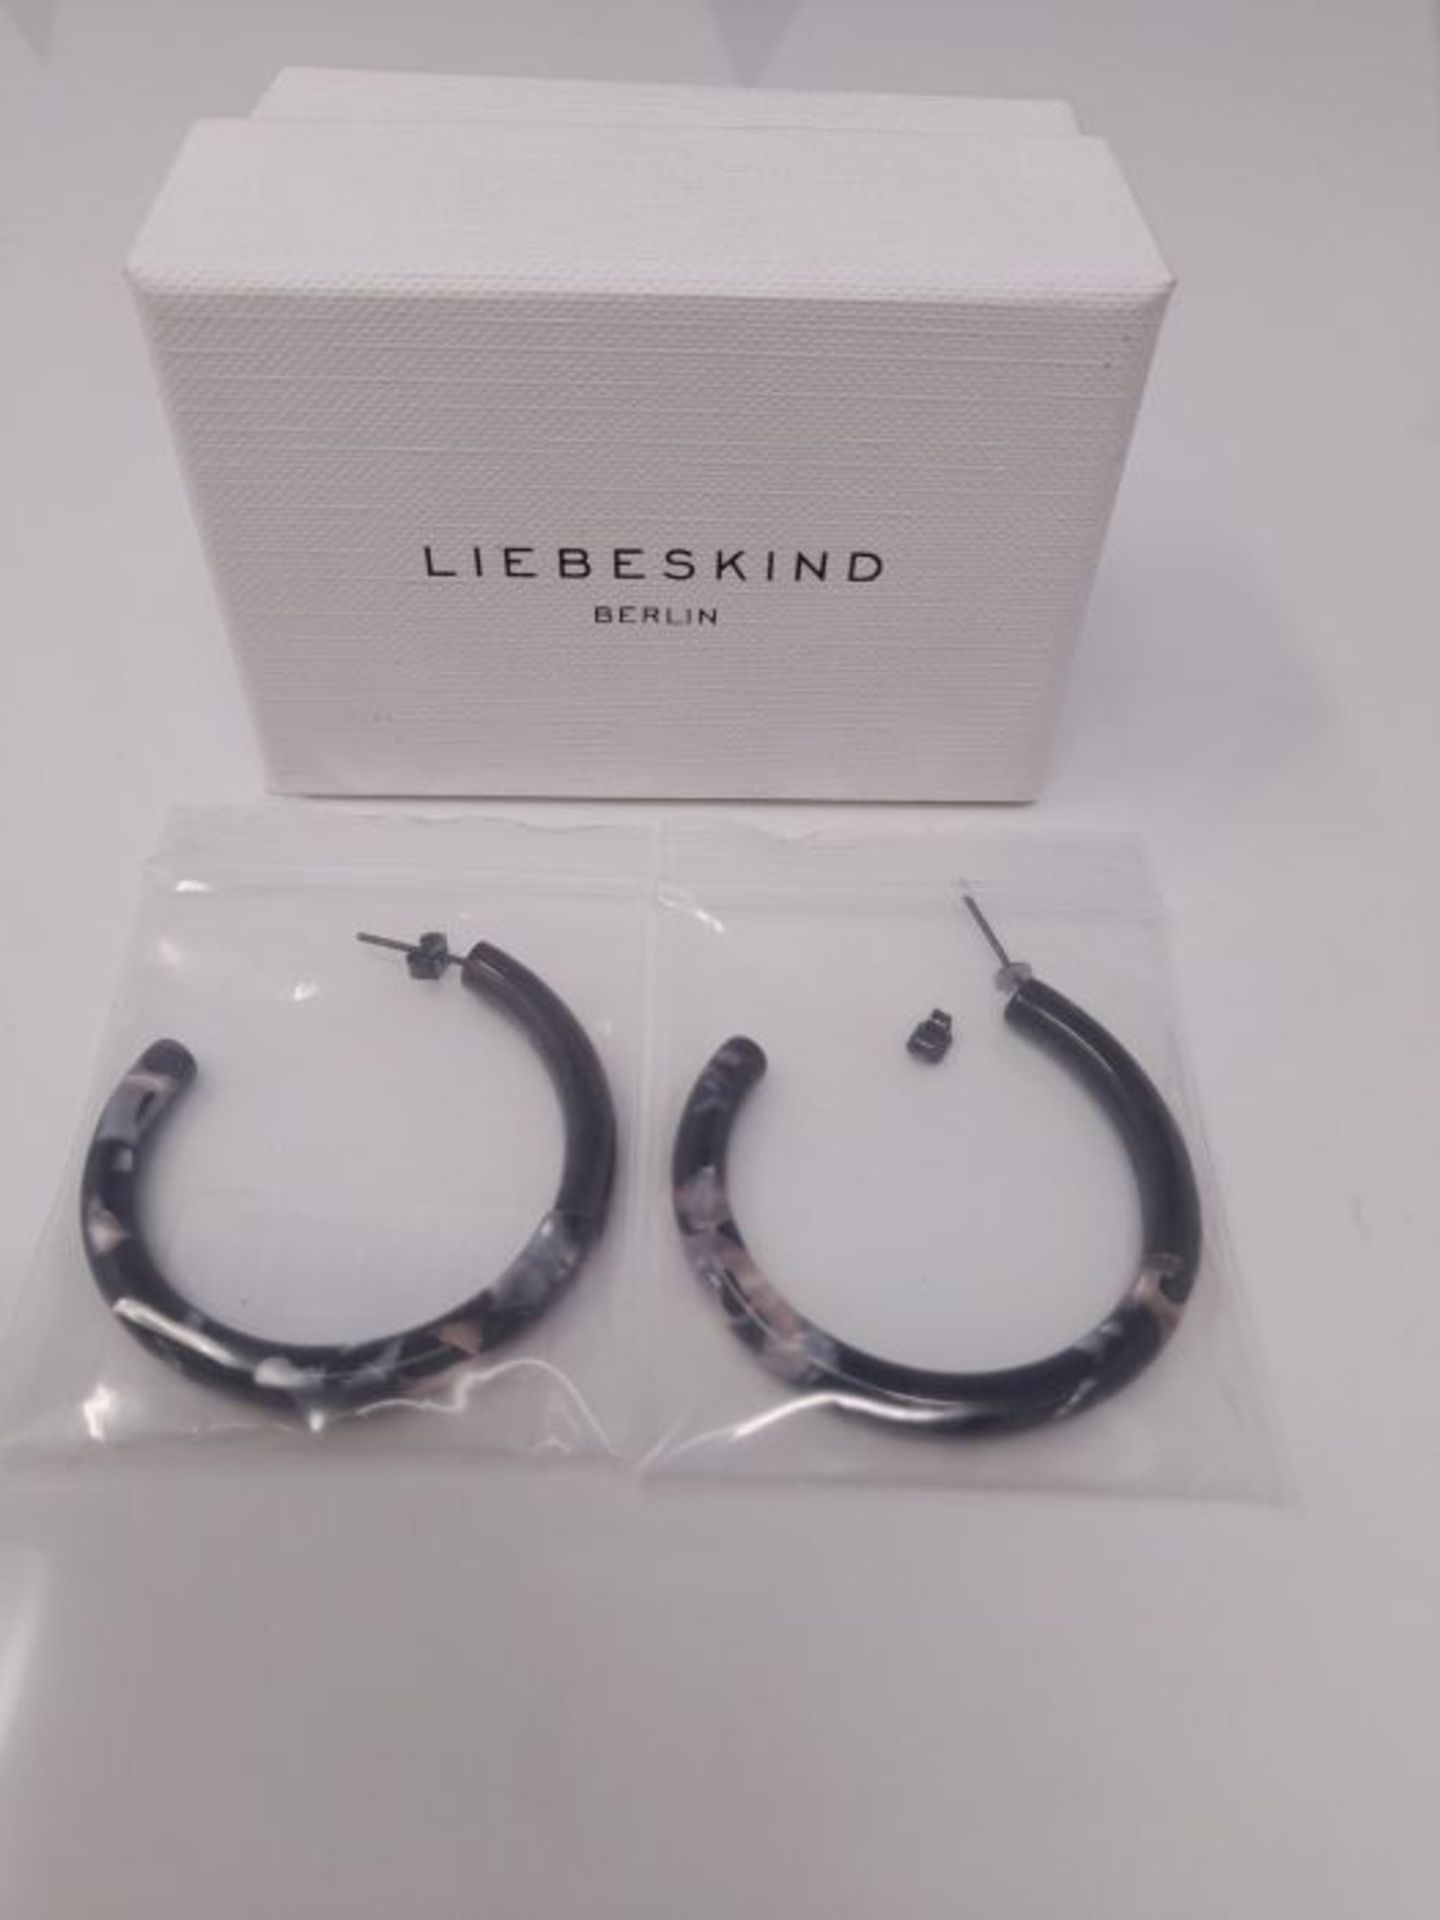 [CRACKED] Liebeskind Berlin Women's Creole Earrings Stainless Steel, Standard, Stainle - Image 2 of 3